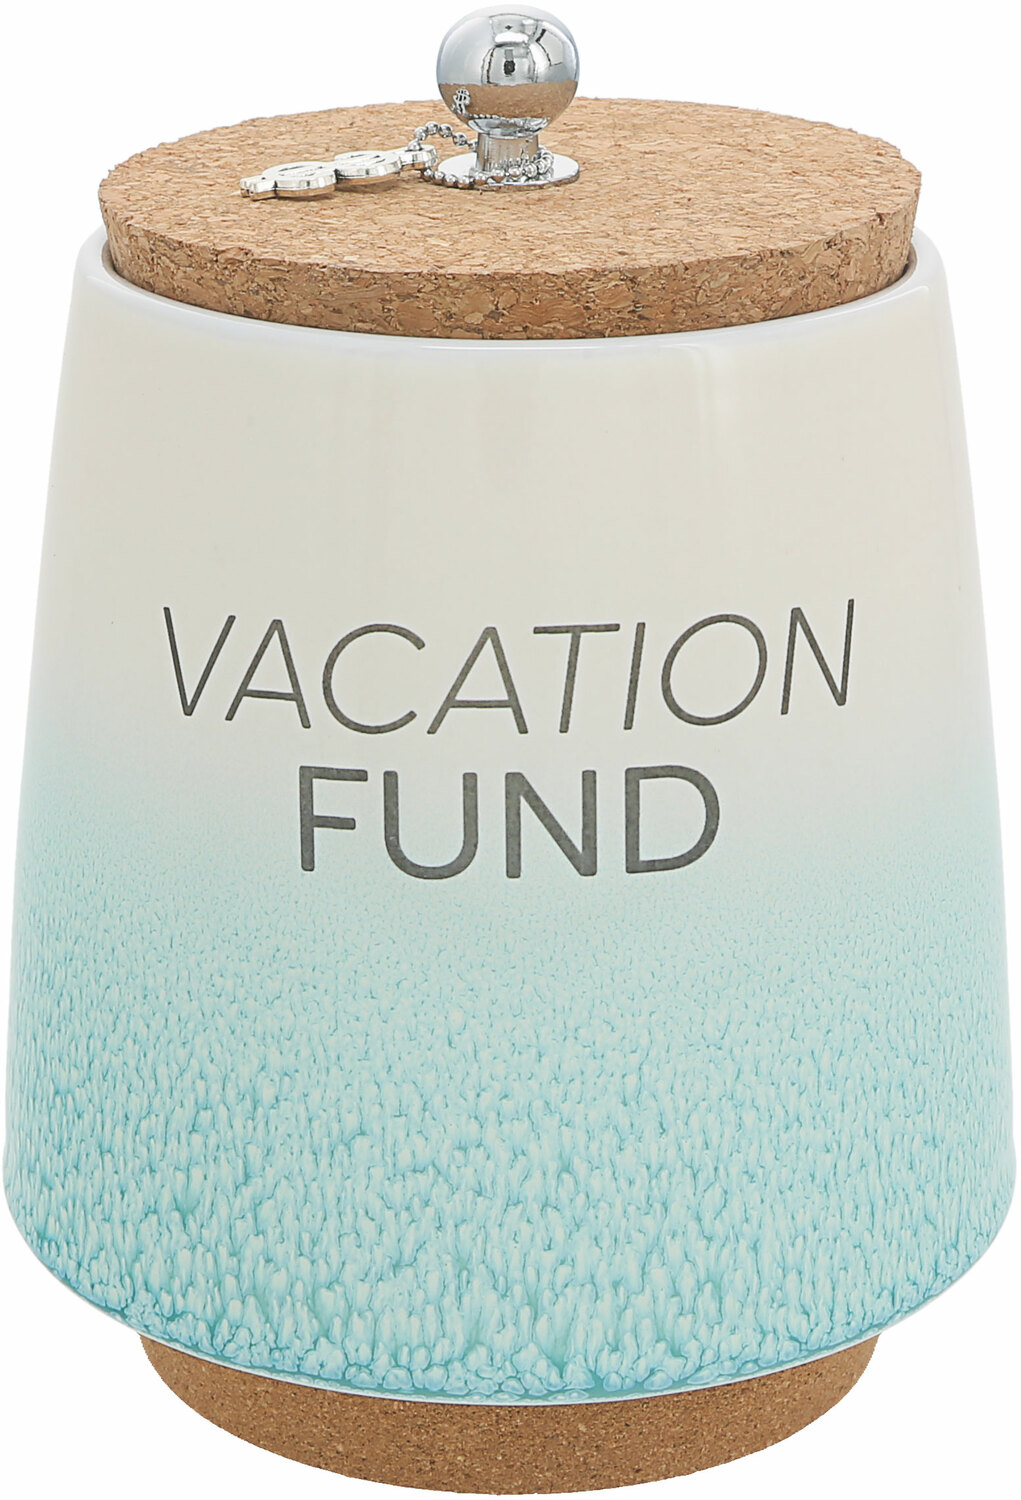 Vacation by So Much Fun-d - Vacation - 6.5" Ceramic Savings Bank